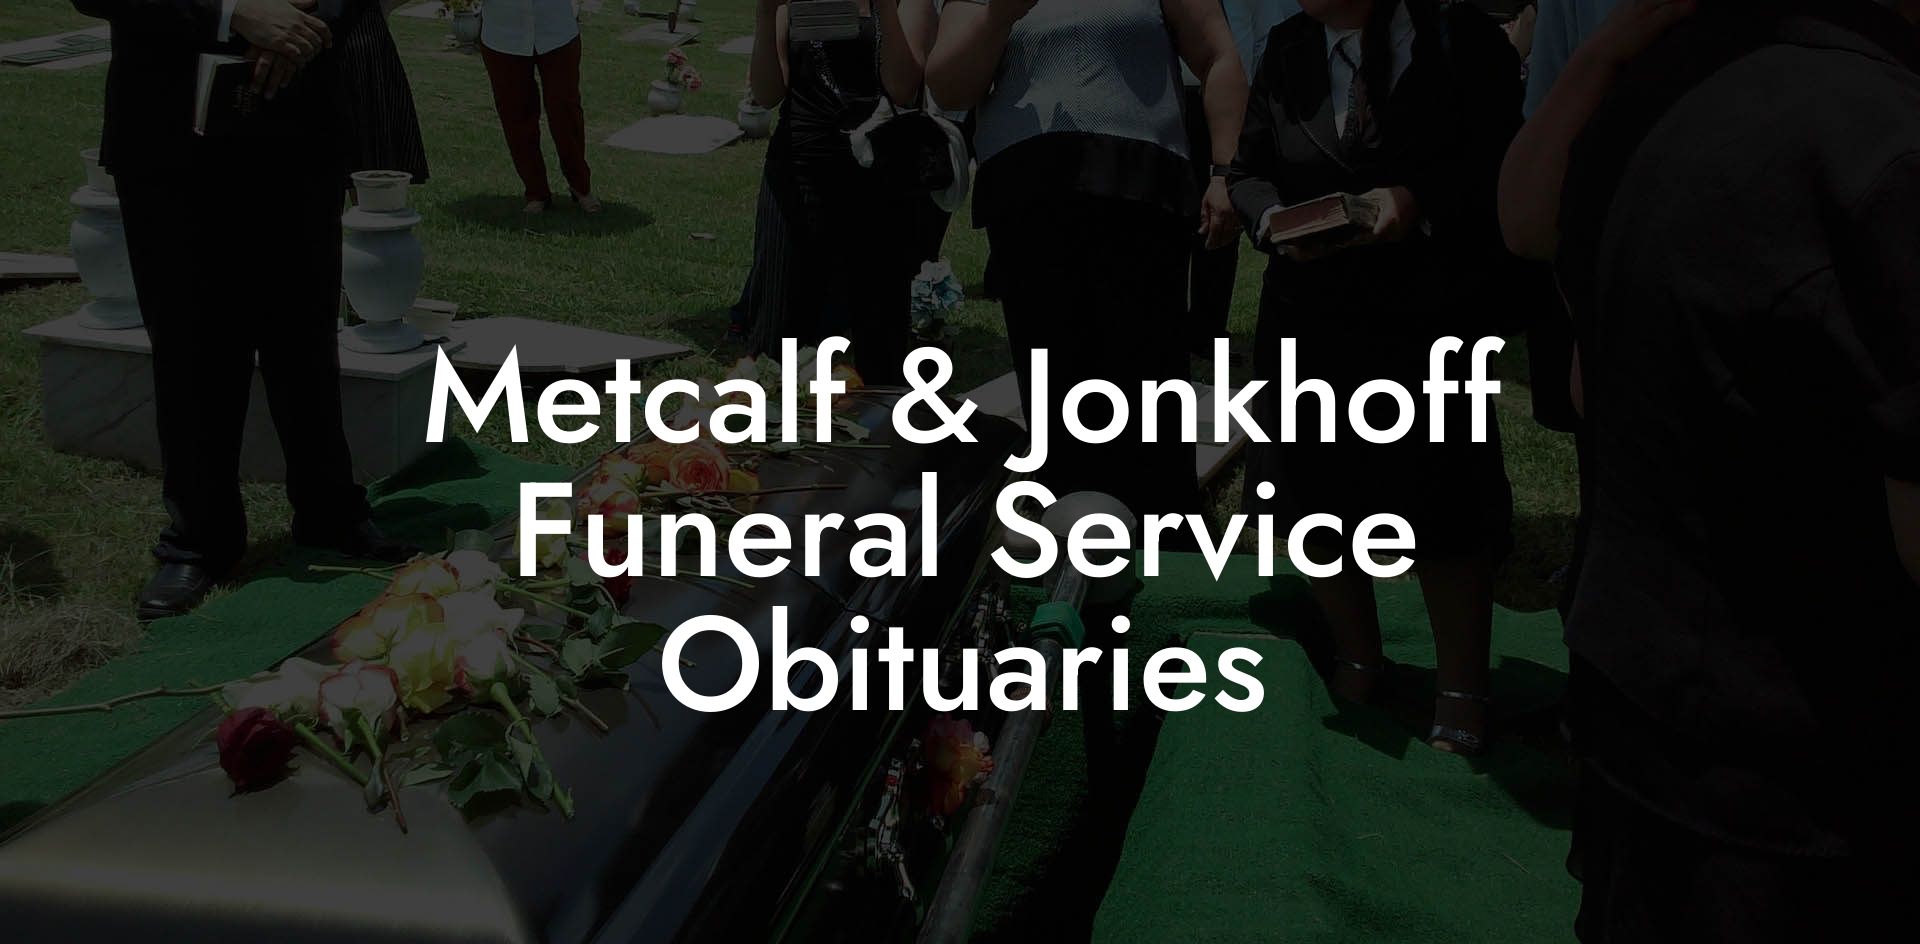 Metcalf & Jonkhoff Funeral Service Obituaries